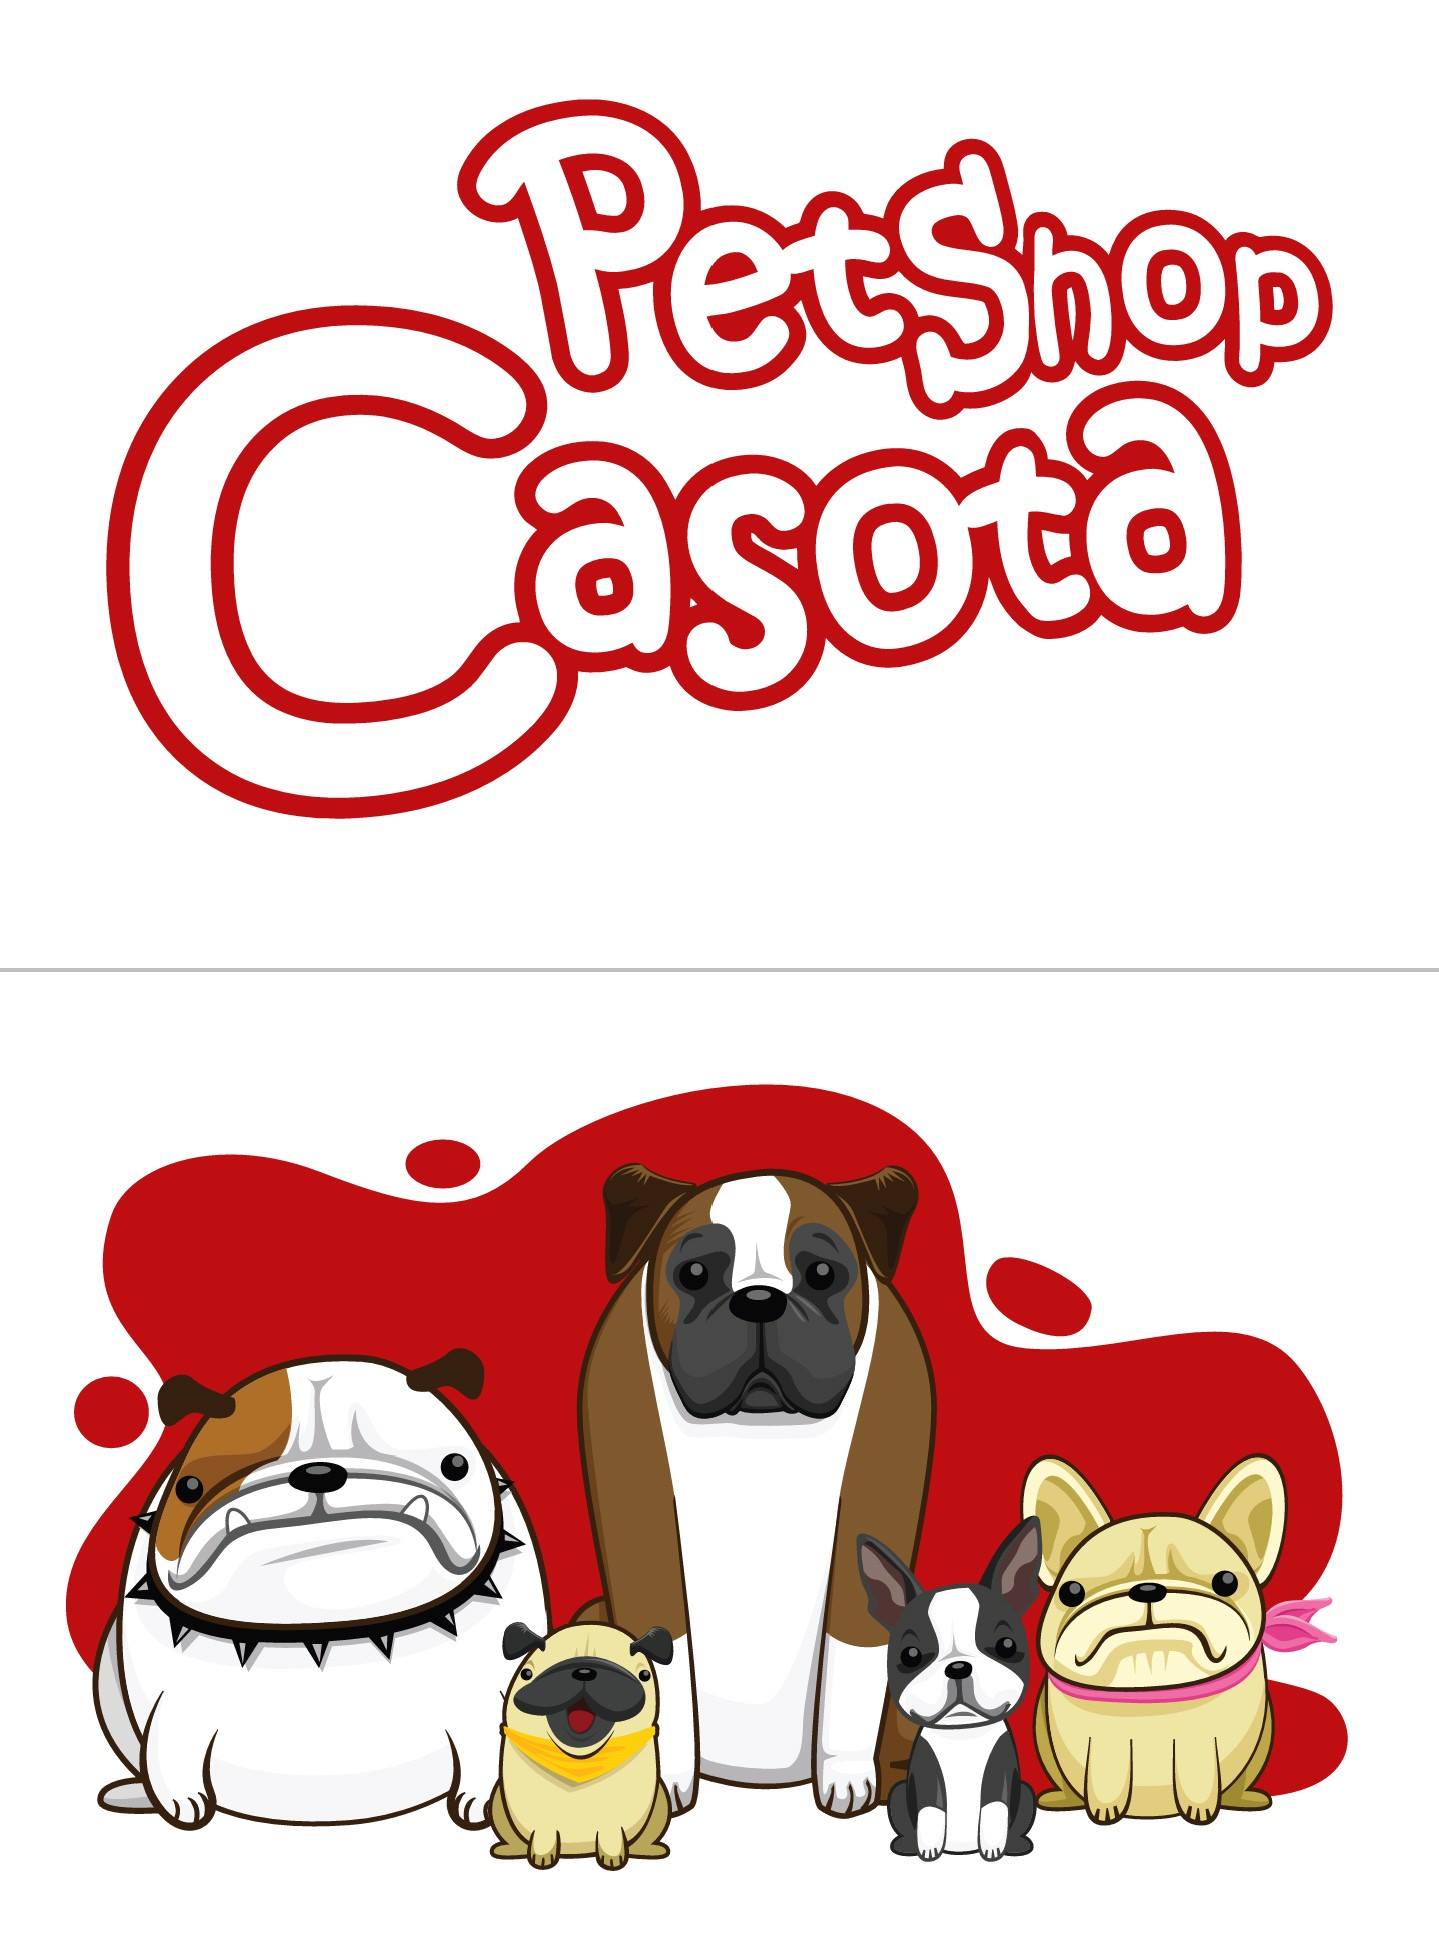 PetShop Casota